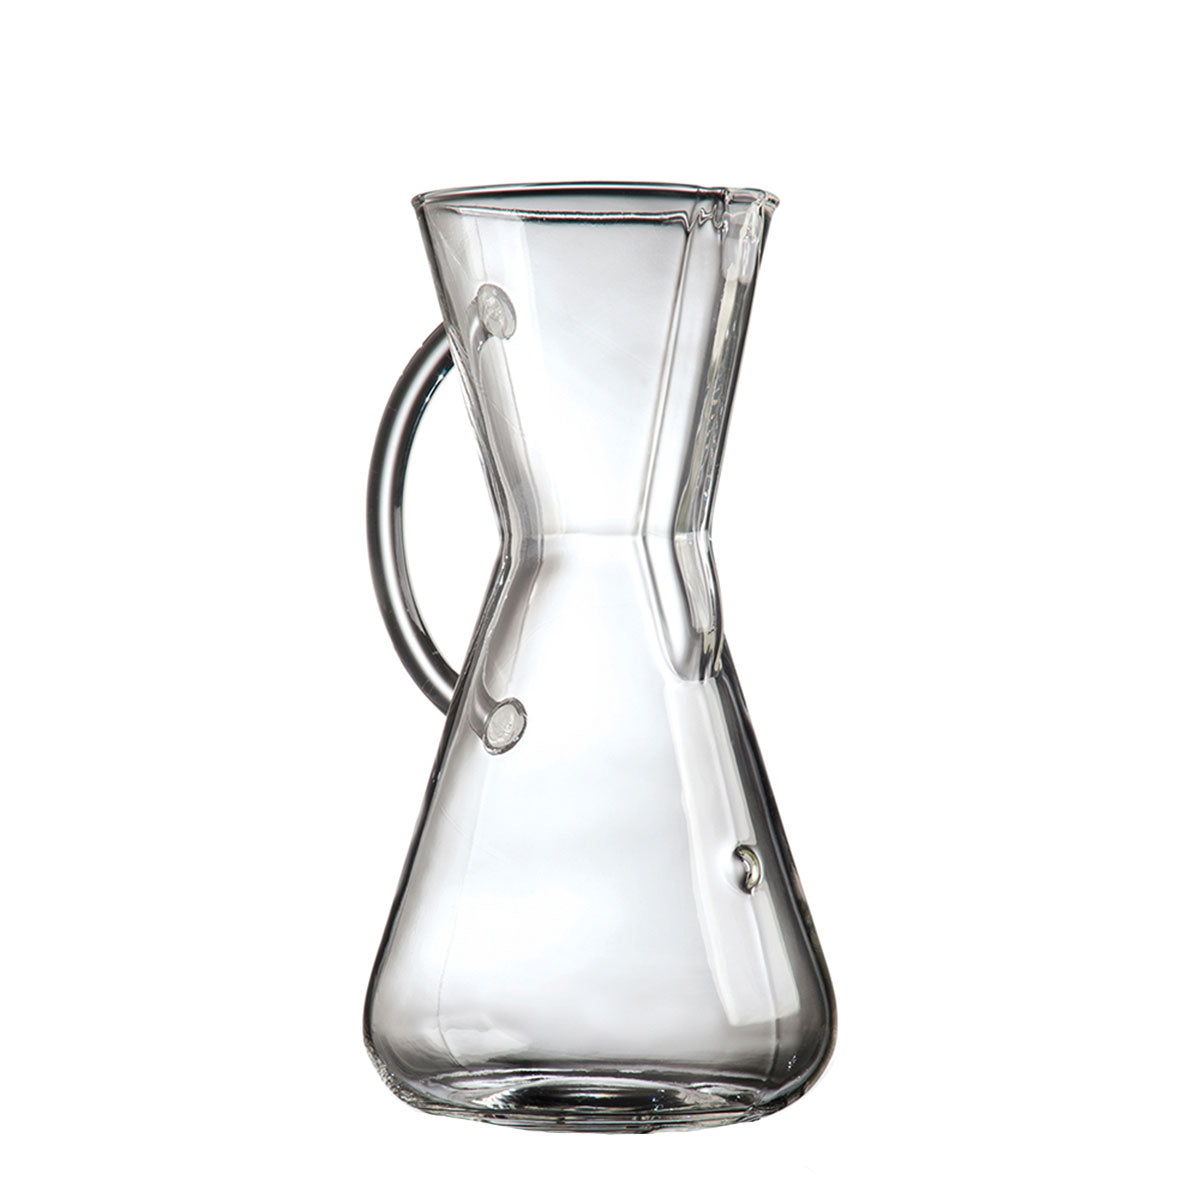 YAMA GLASS 3 CUP TABLETOP SIPHON COFFEE MAKER (ALCOHOL BURNER) — Luxio